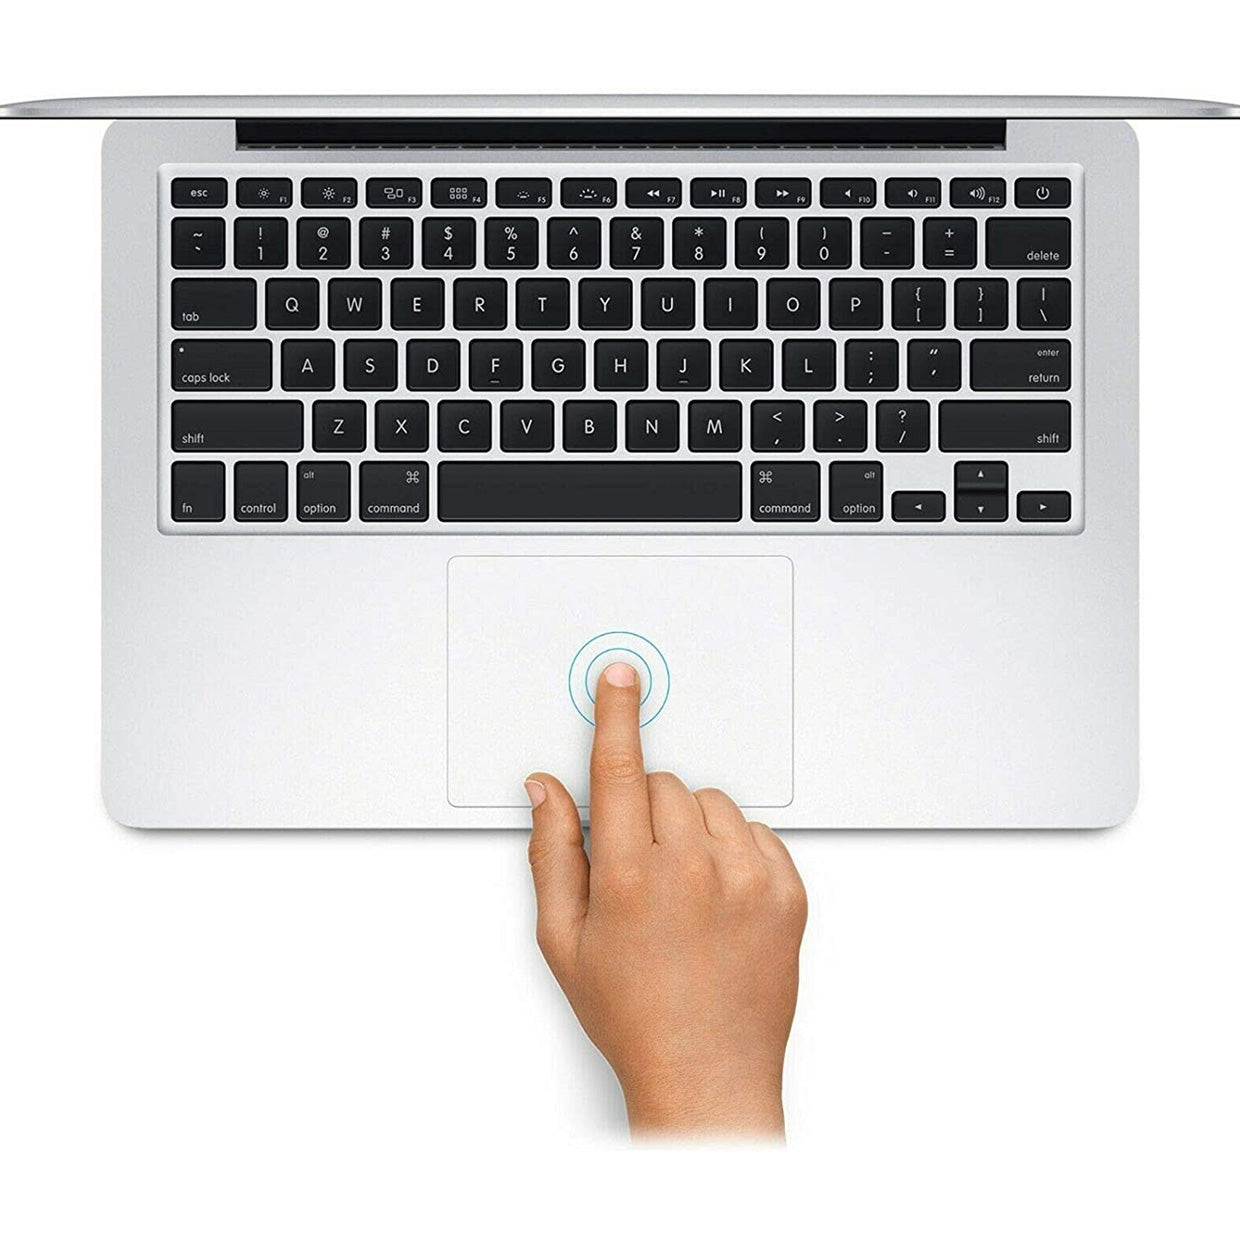 Apple MacBook A1398, 2015, i7, 16 GB, 256 SSD, Silver